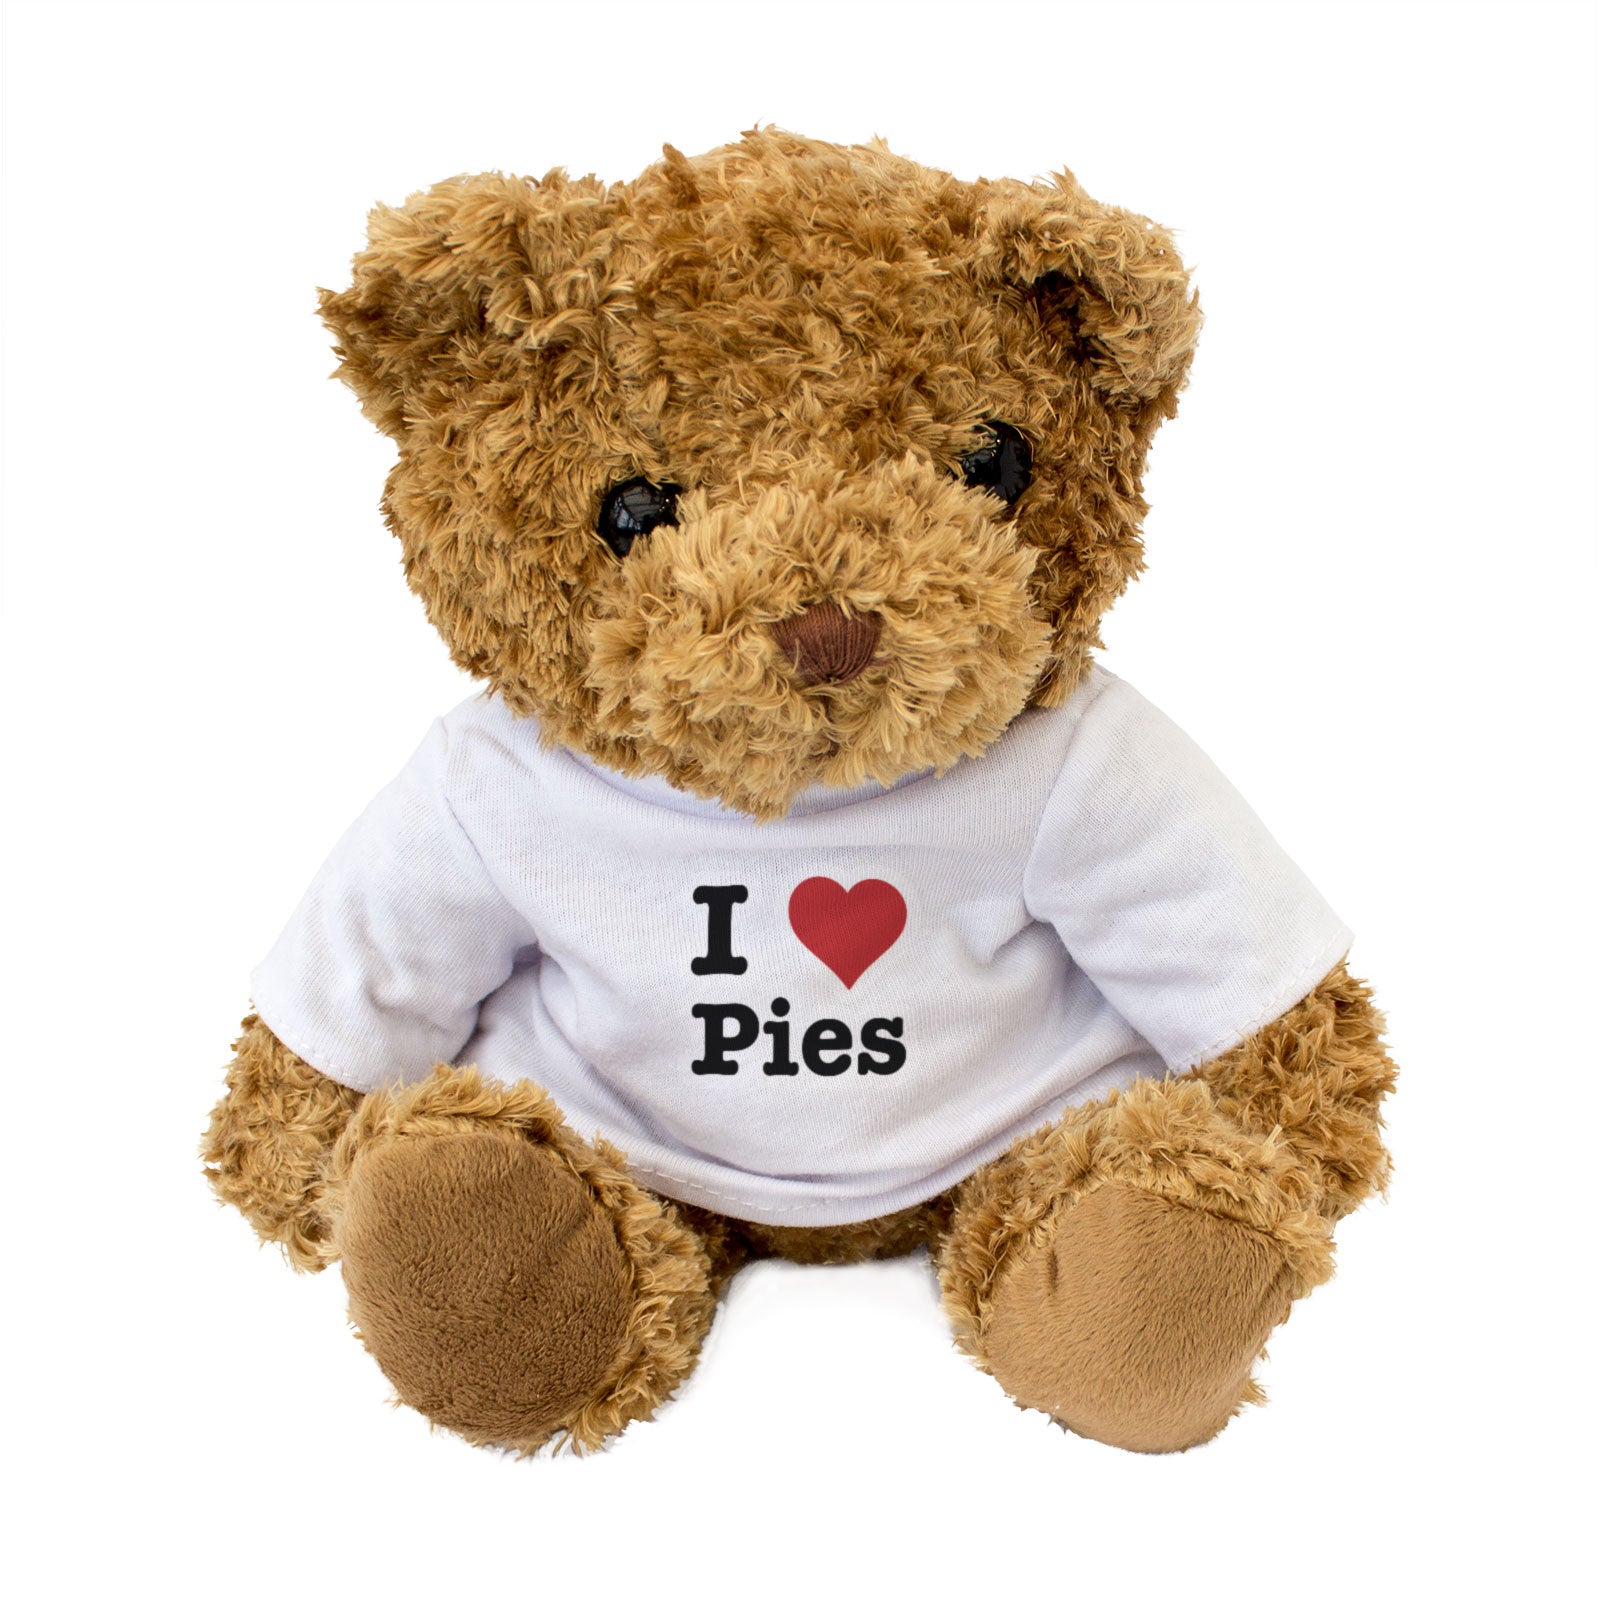 I Love Pies - Teddy Bear